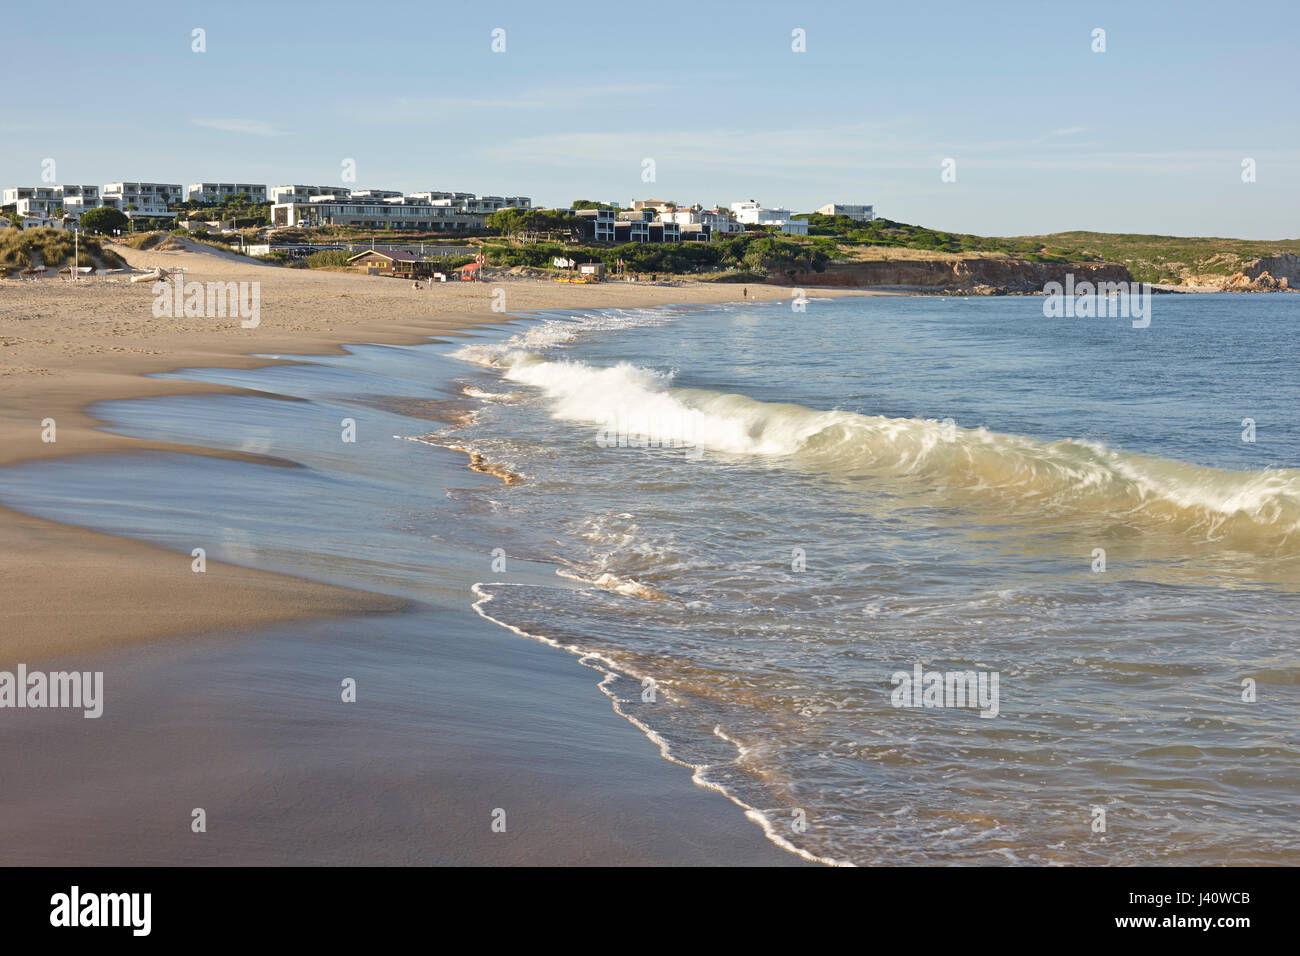 Martinhal beach with Martinhal Beach Resort & Hotel, Sagres, Algarve, Portugal, southernmost region of mainland Europe Stock Photo